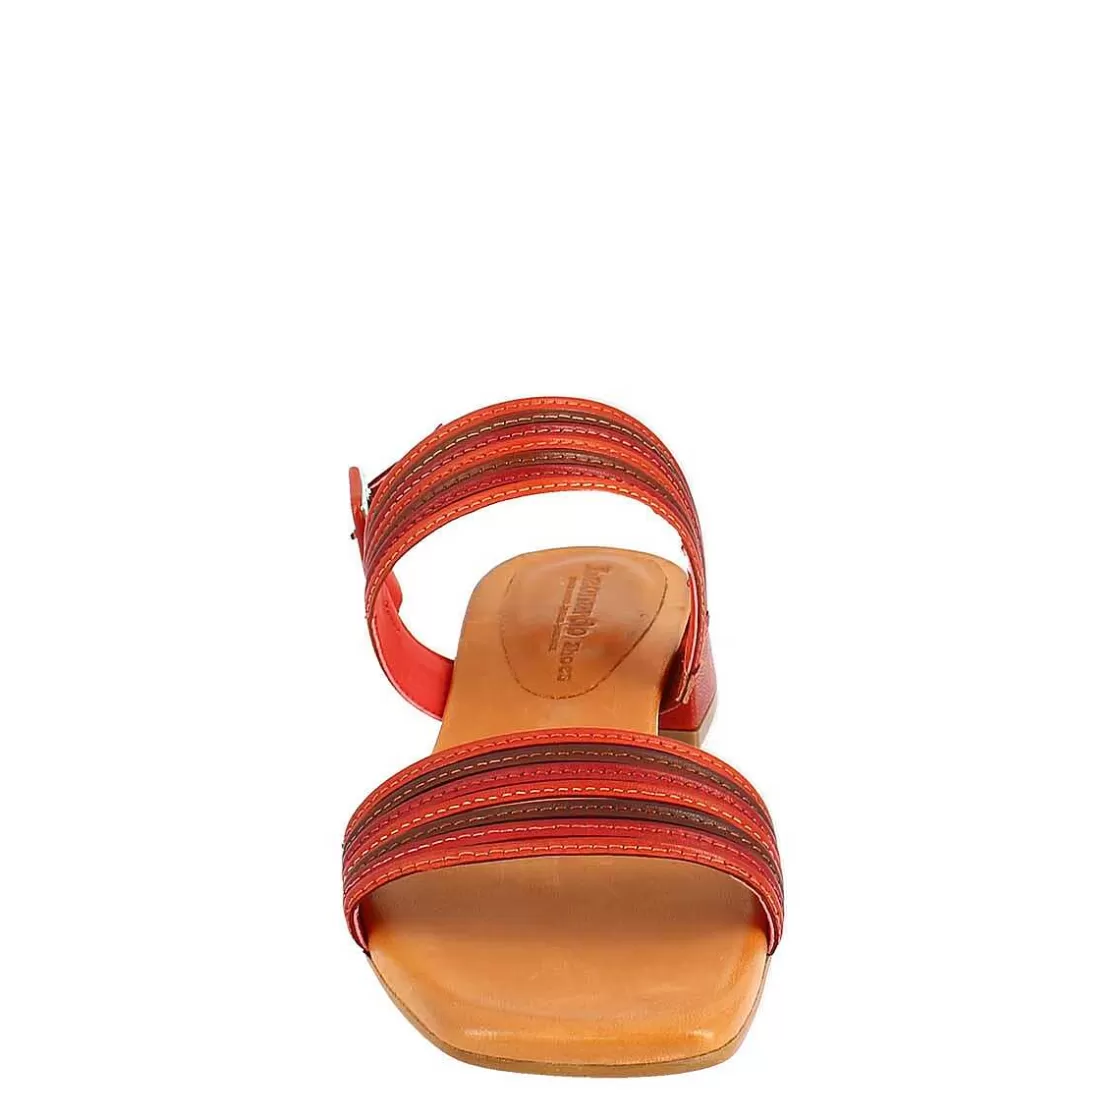 Leonardo Handmade Women'S Slingback Sandals In Red, Orange And Cognac Leather. Store